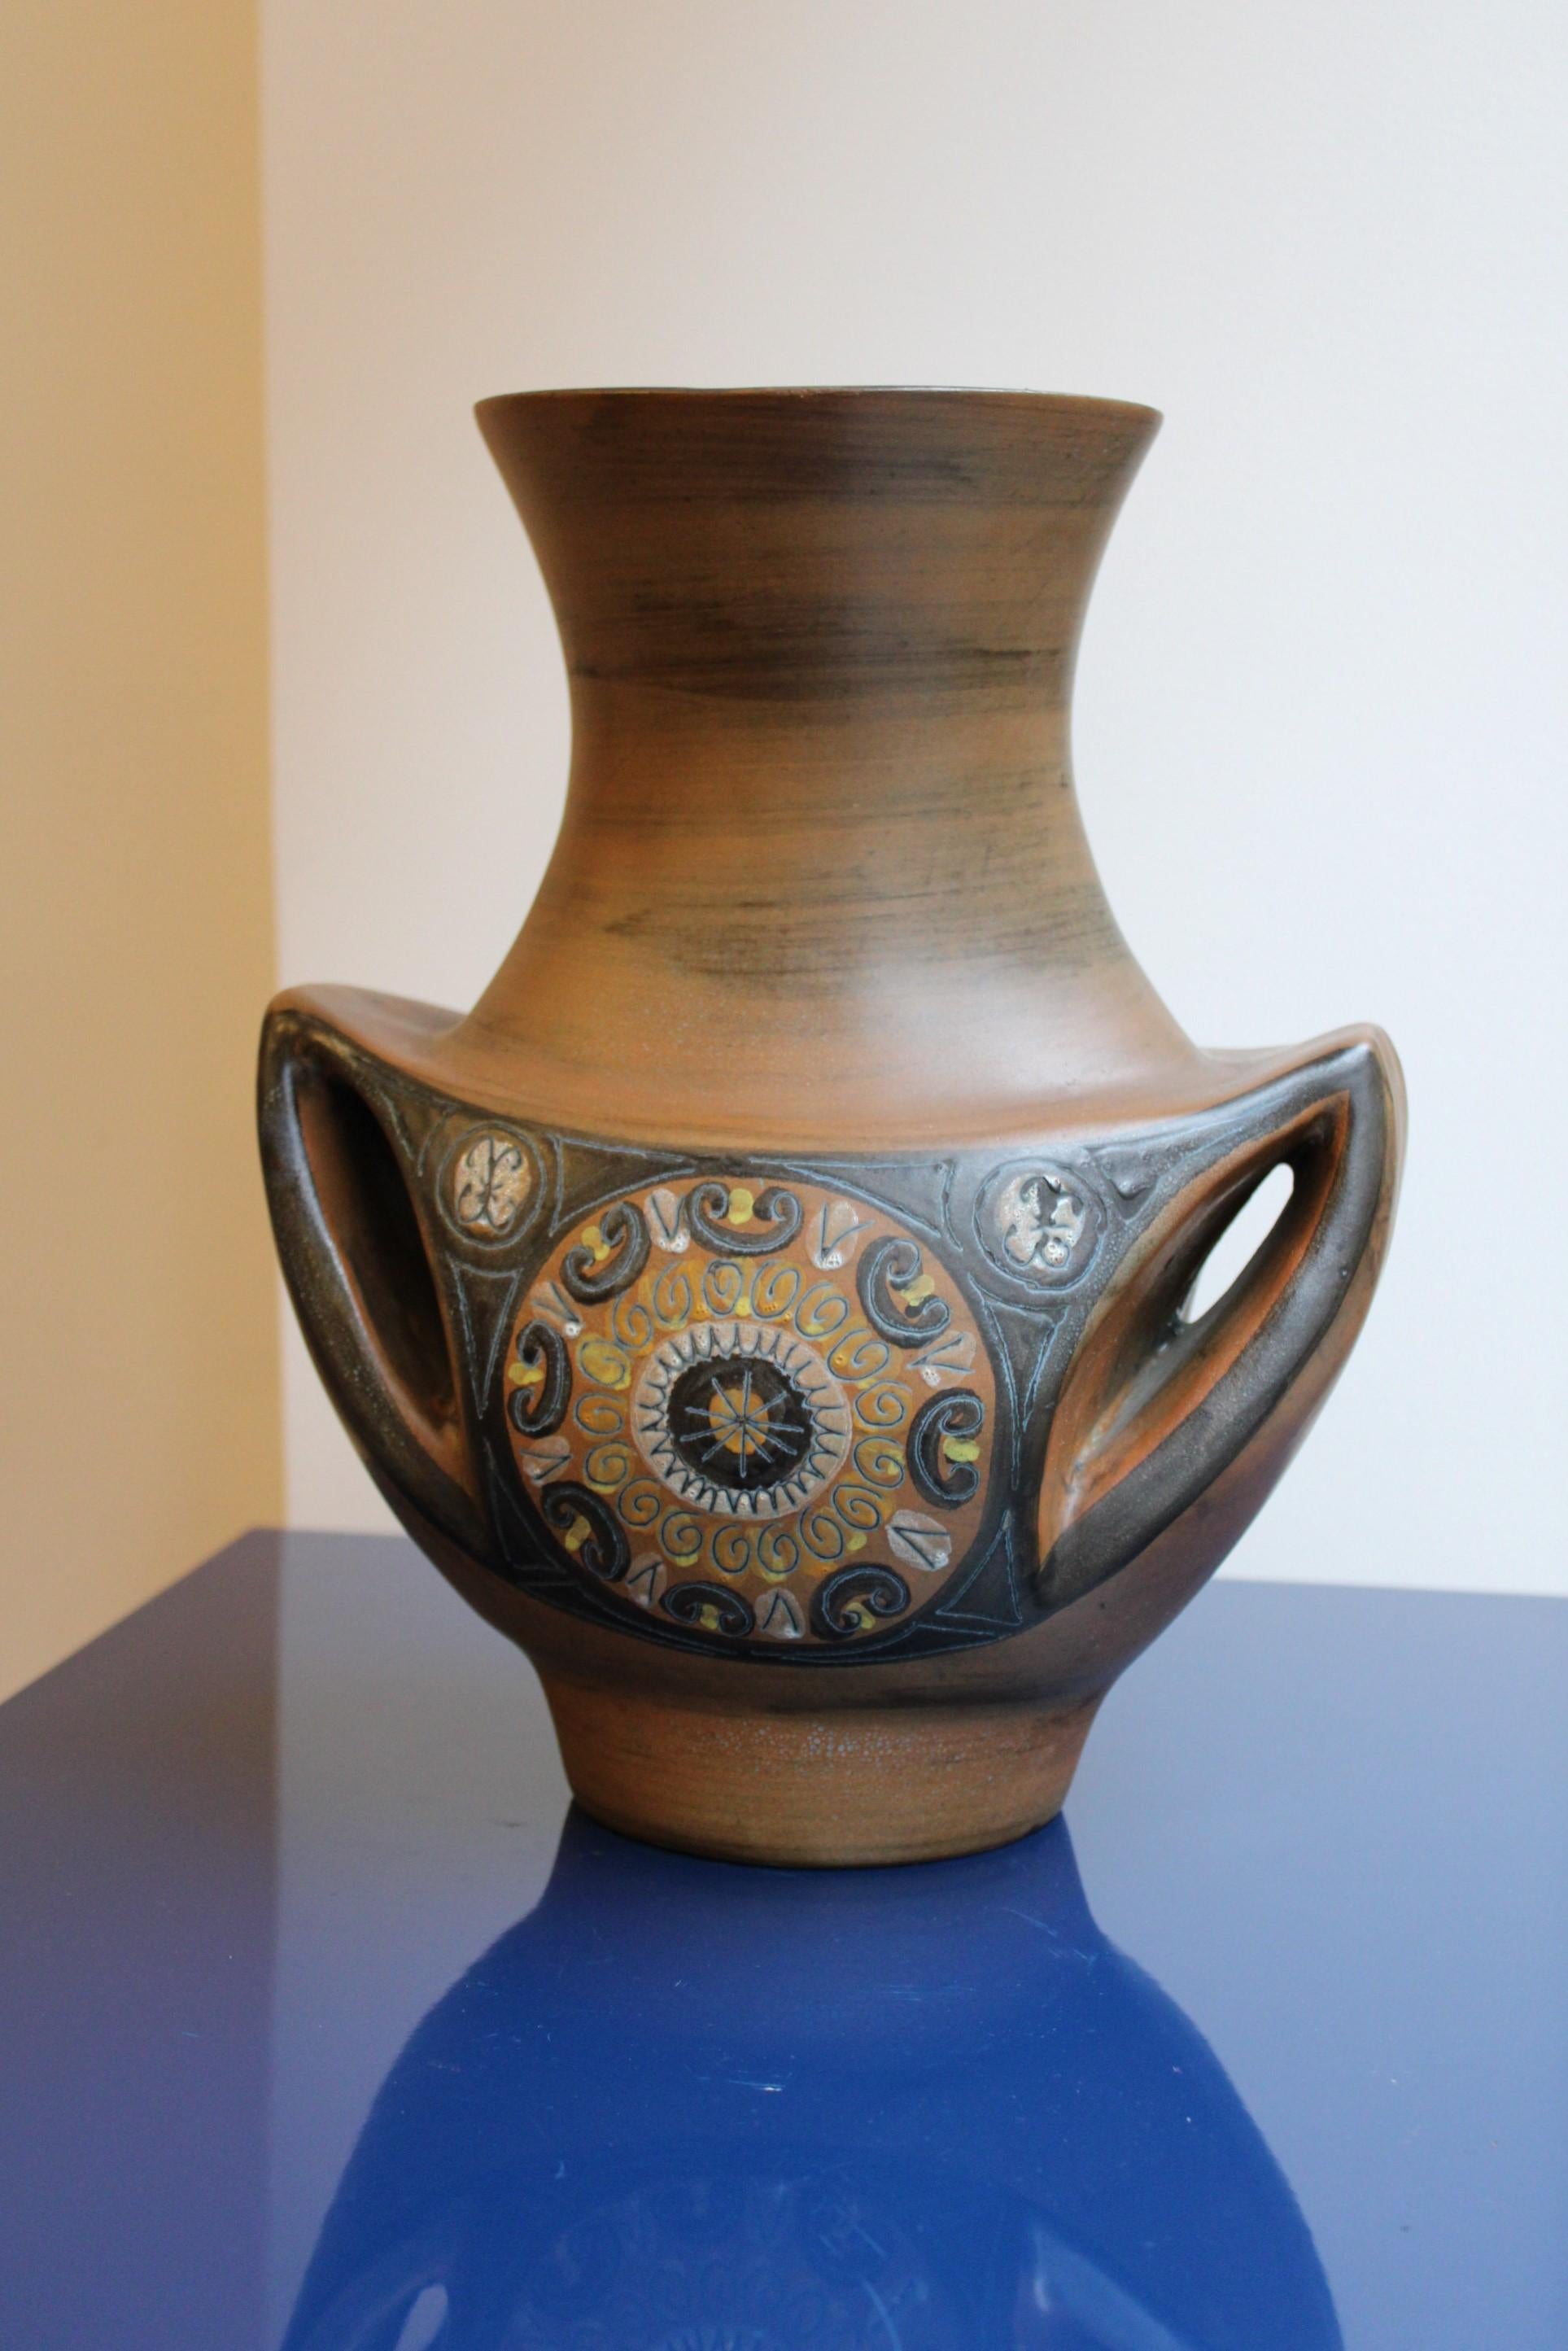 Jean de Lespinasse (French, 1896-1979)
Vase with handles, enamelled ceramic
Signed under the base 